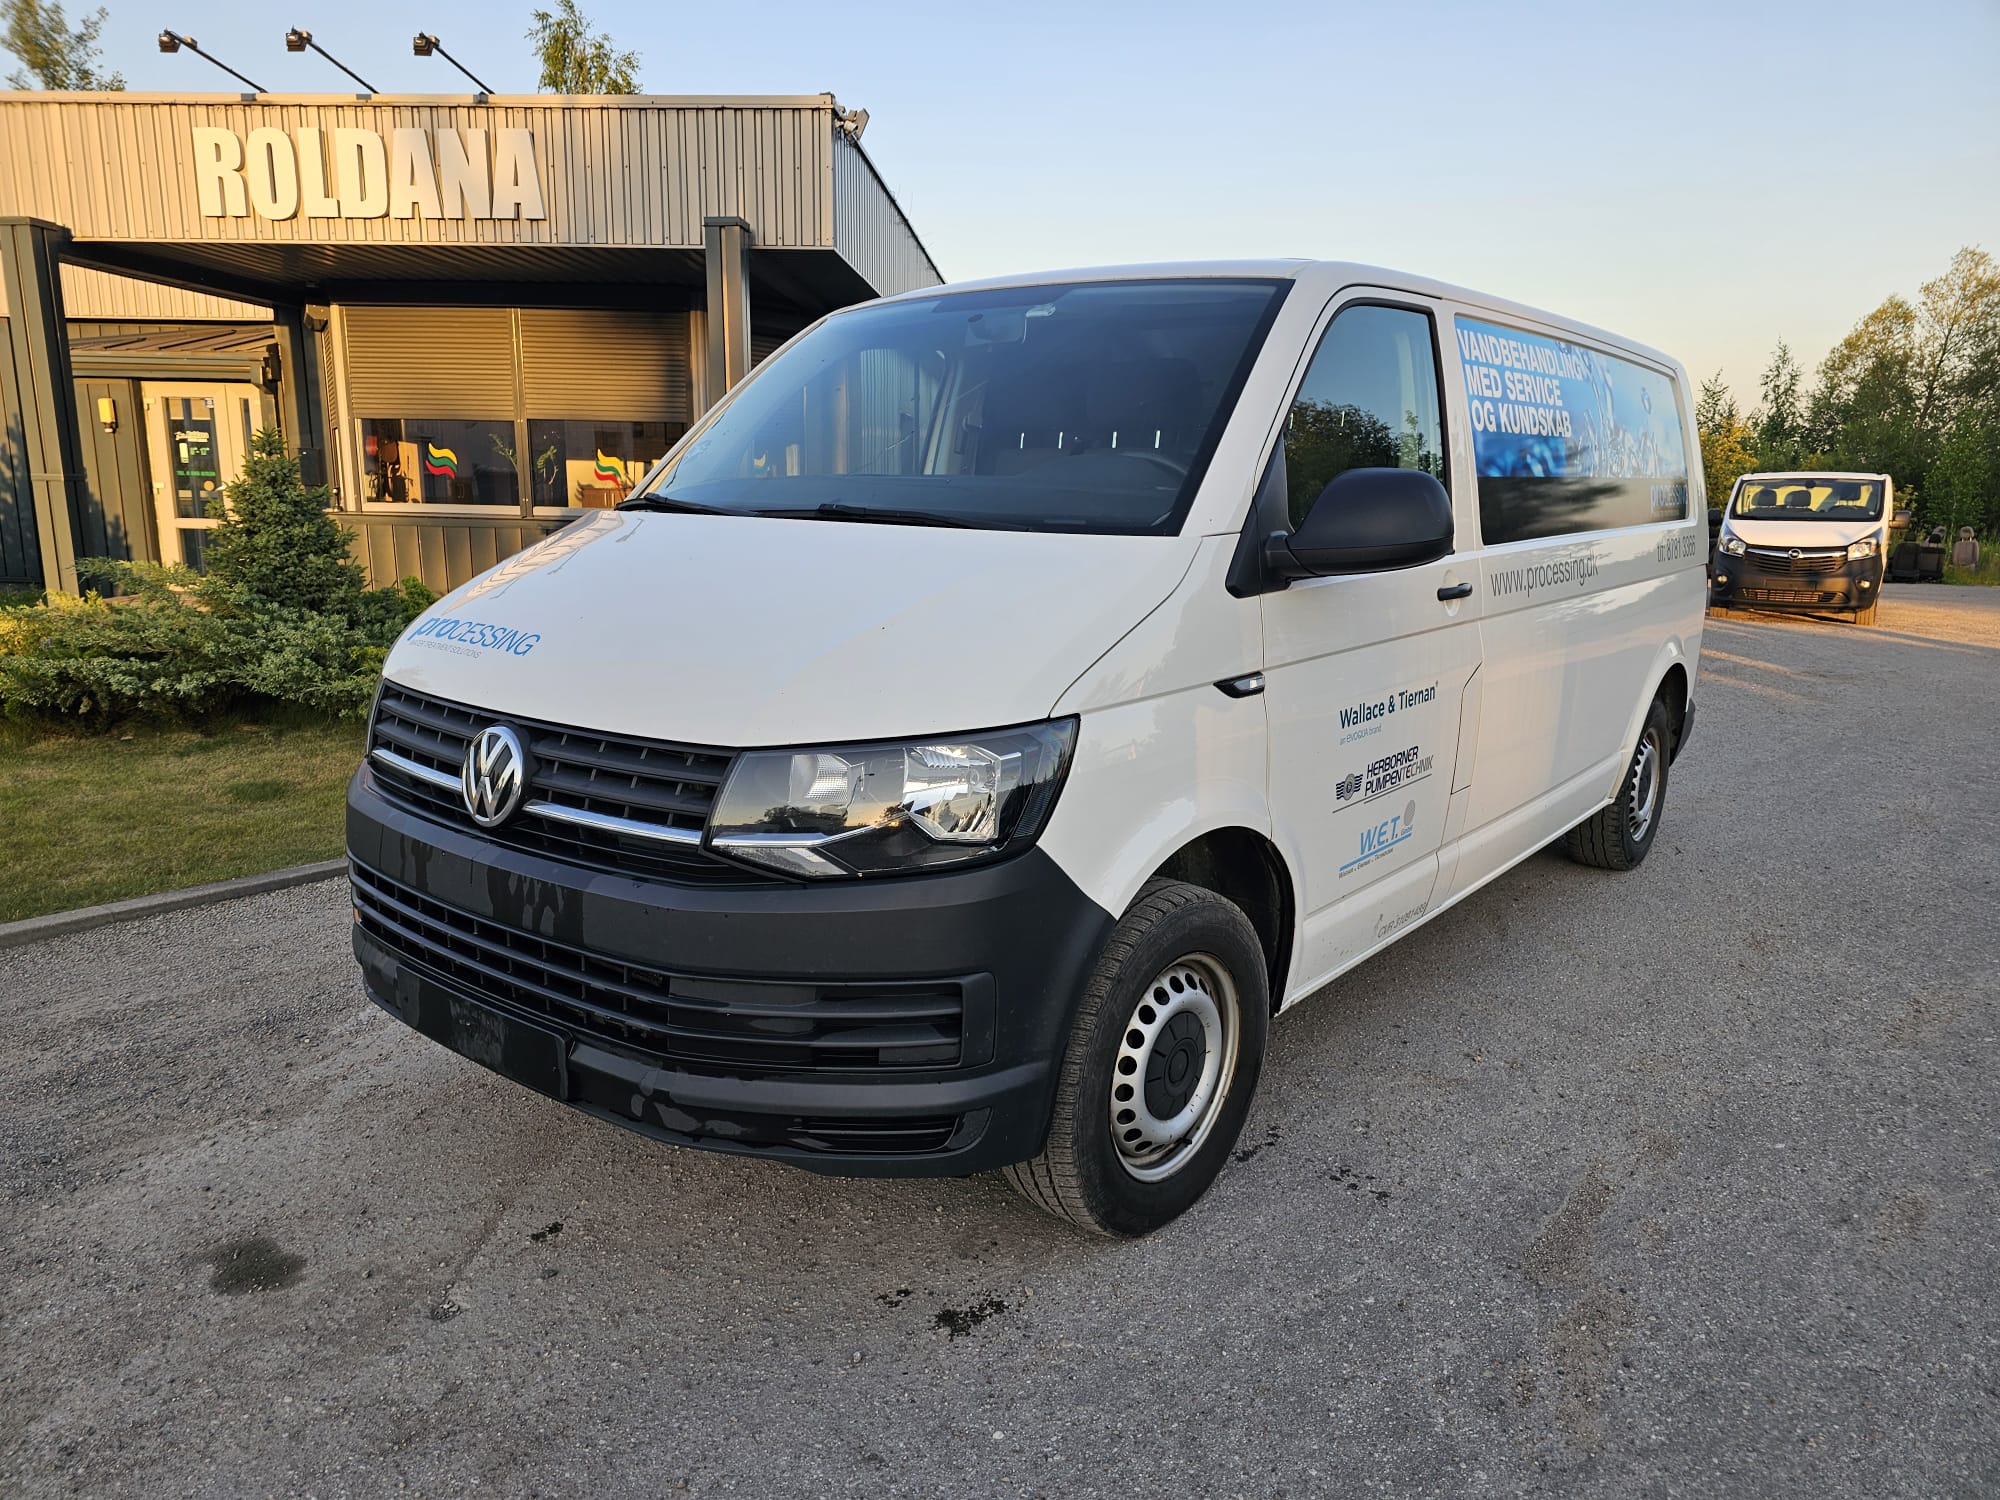 Volkswagen Transporter, 2.0 l., cargo van, 2017-12/naudoti automobiliai/Roldana